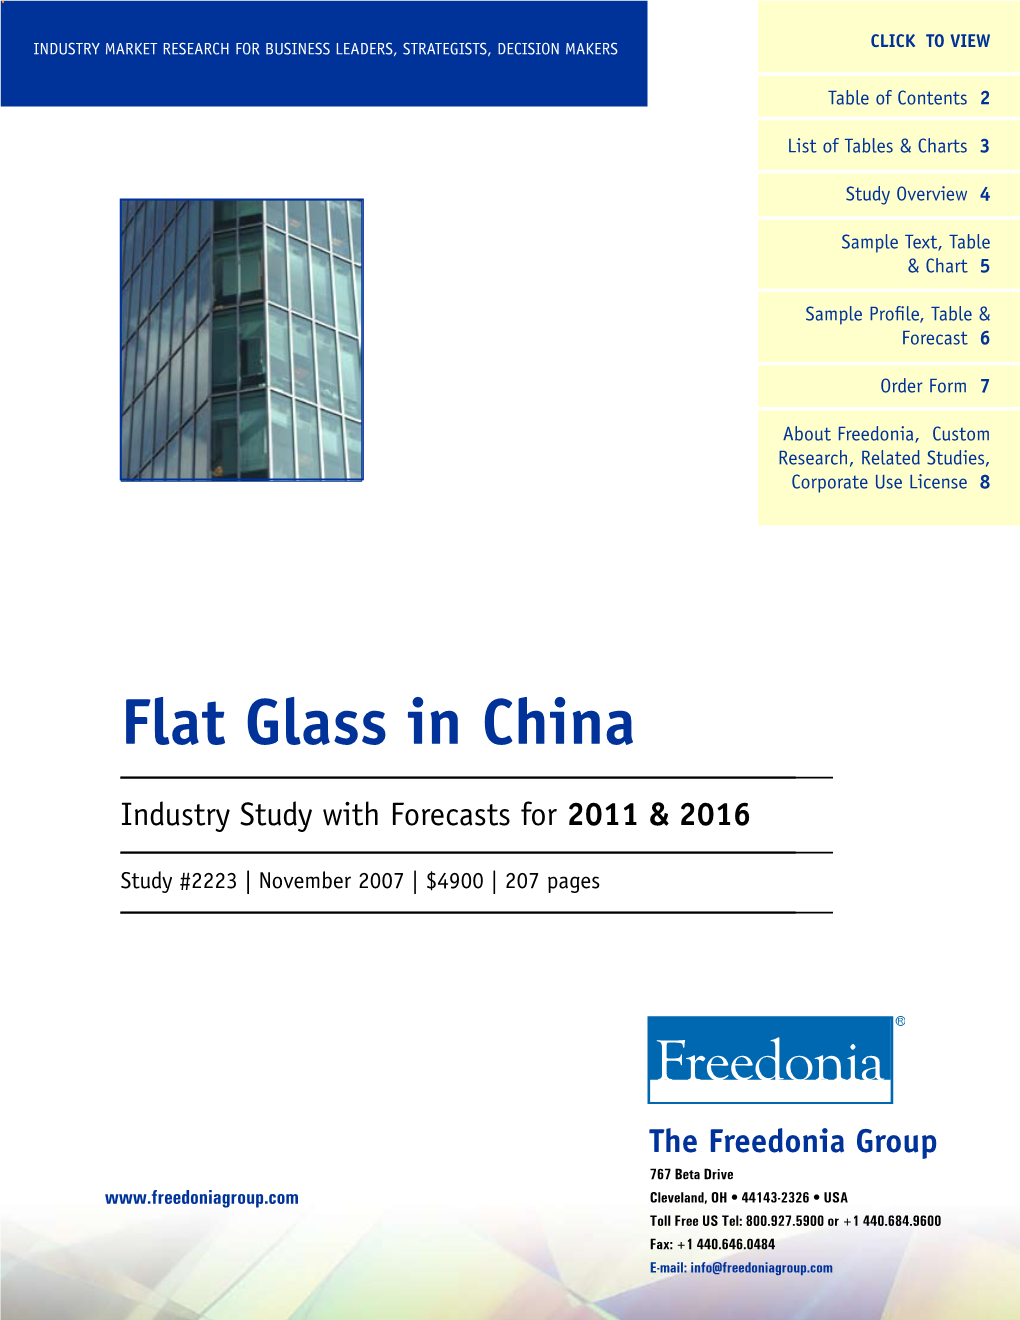 Flat Glass in China